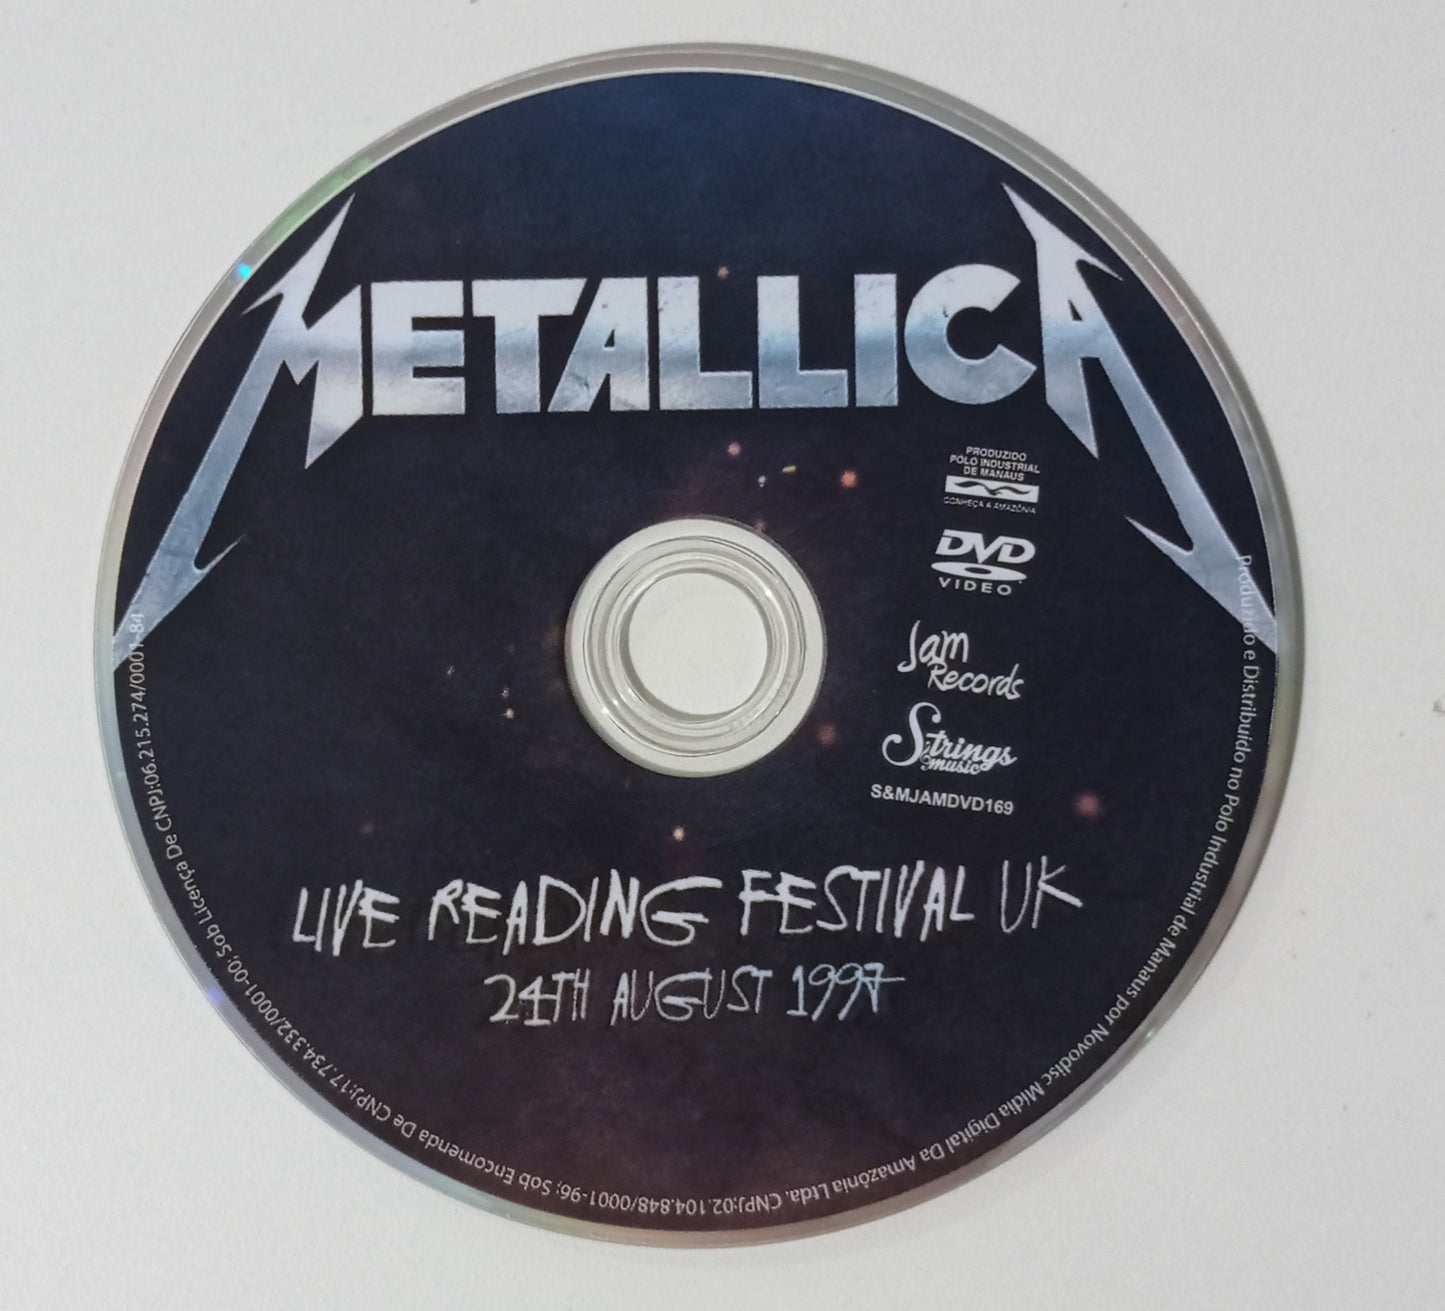 Metallica - Live Reading Festival UK 24th August 1997 (DVD Nacional - Usado)